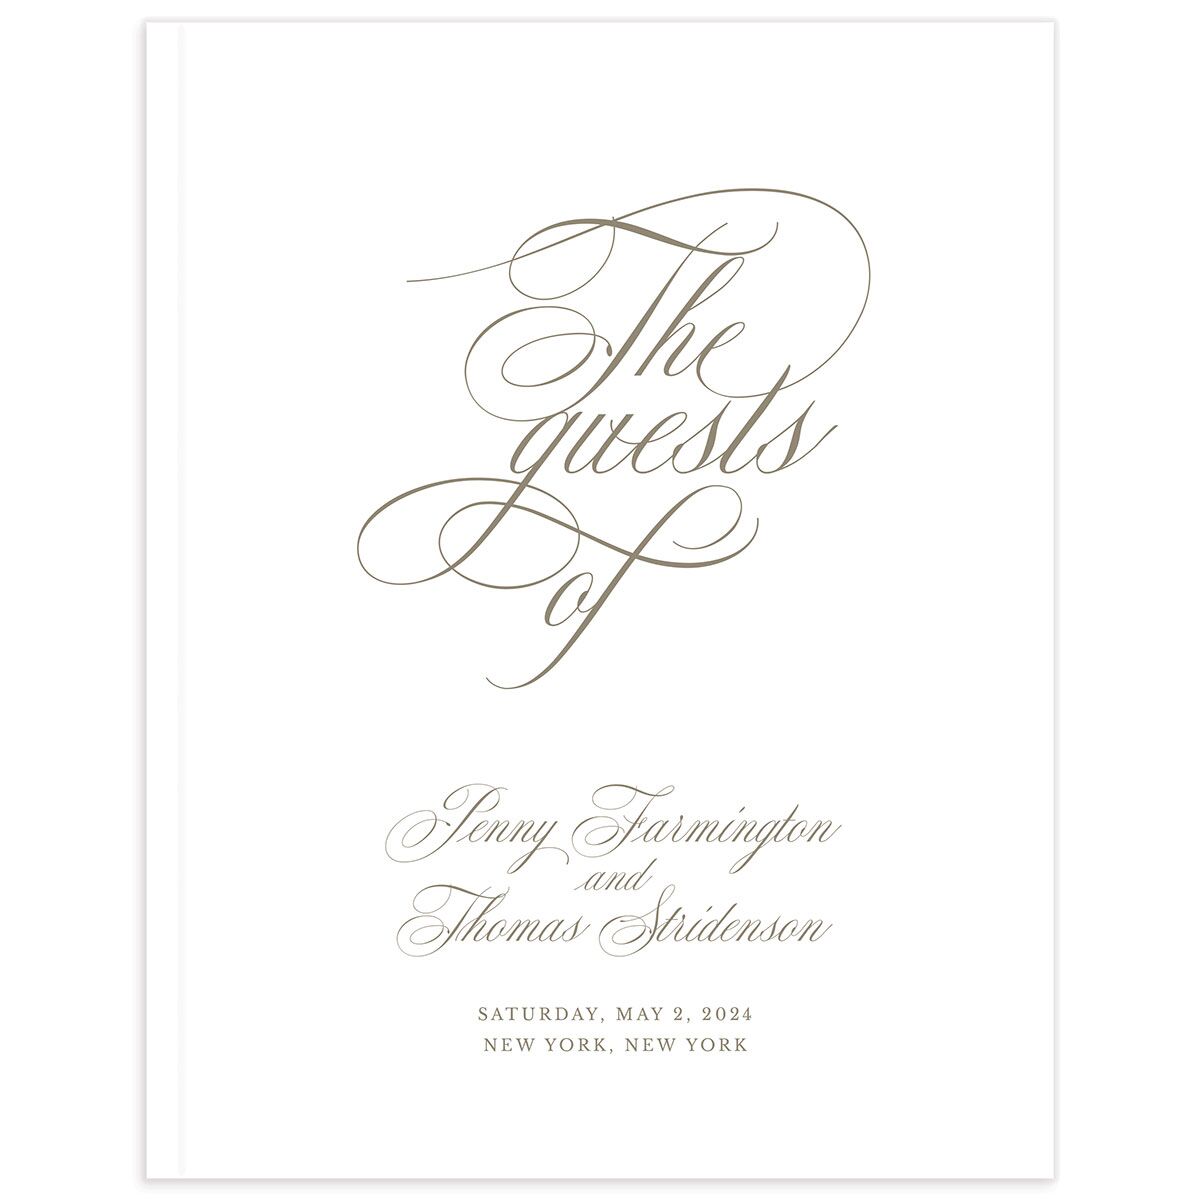 Flowing Script Wedding Guest Book